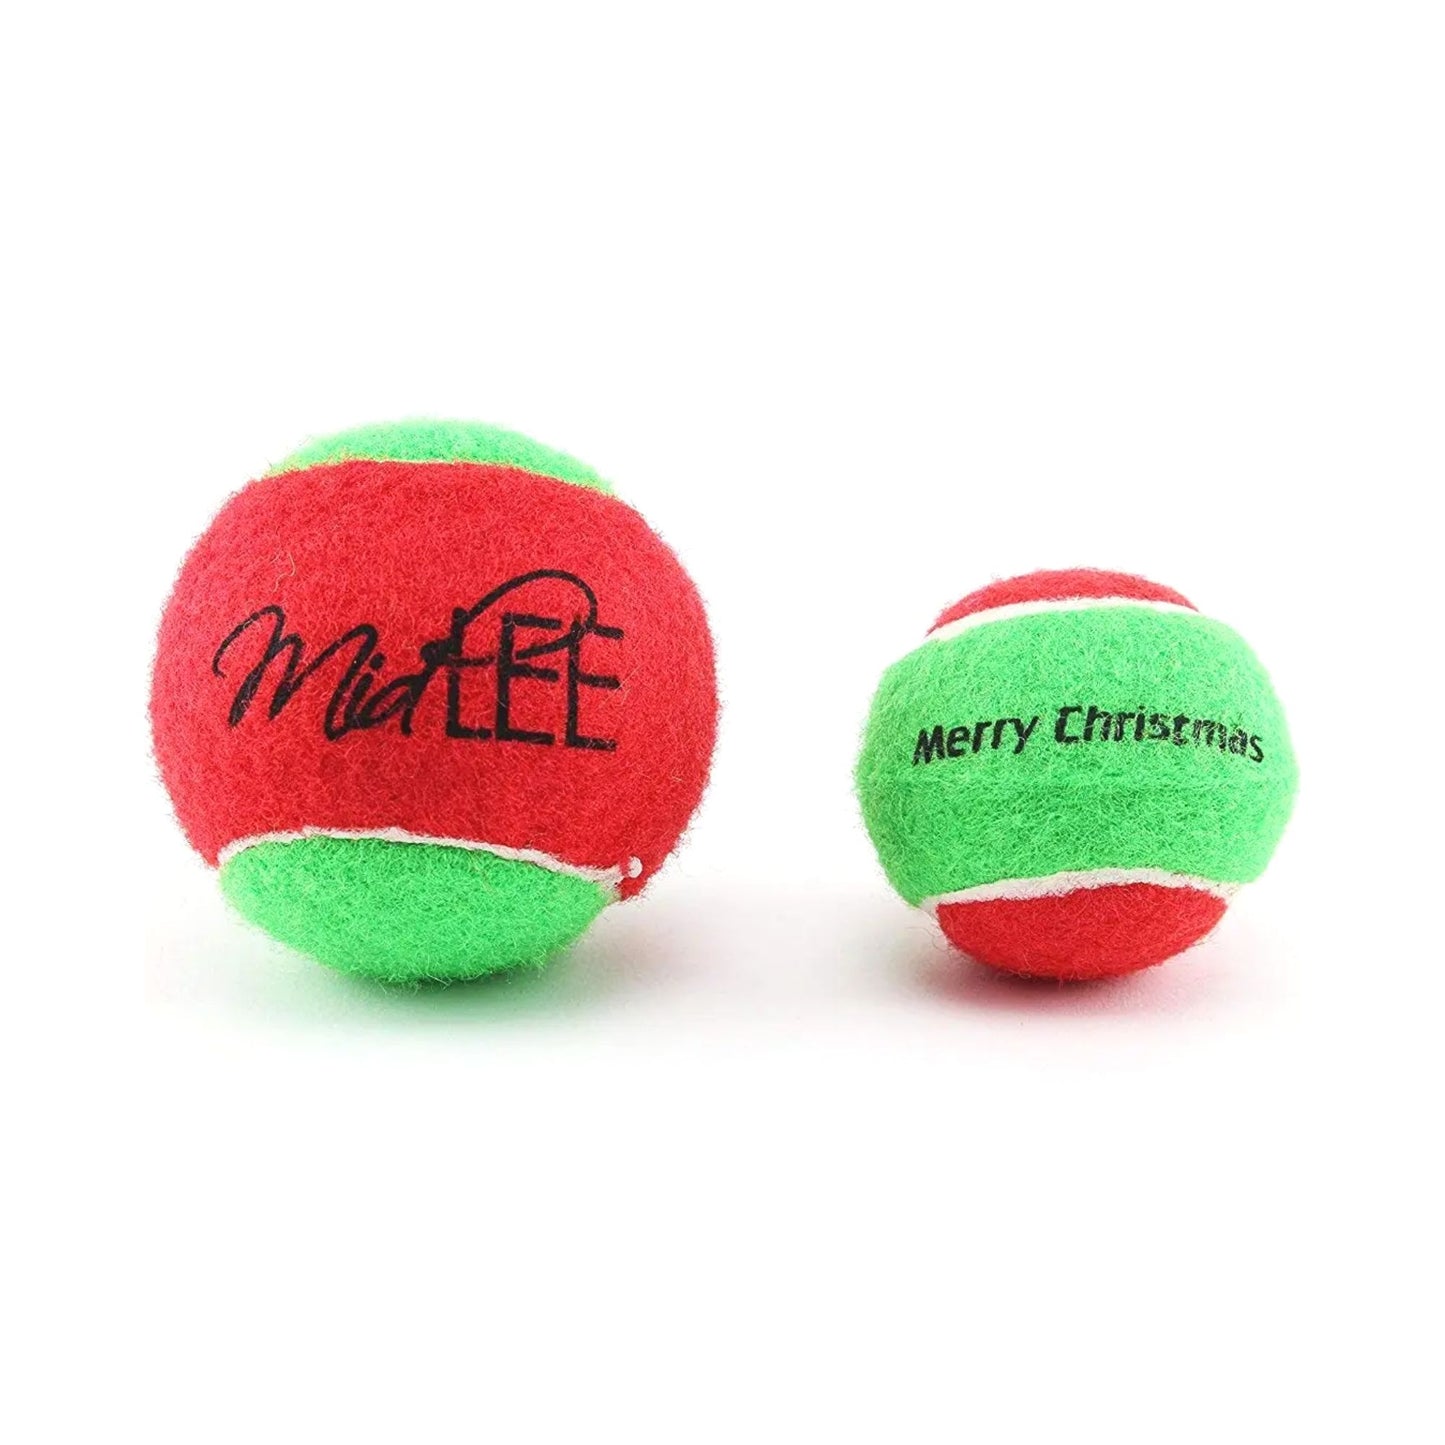 Midlee Candy Cane Filled 1.5" Dog Tennis Balls- Set of 6 Balls